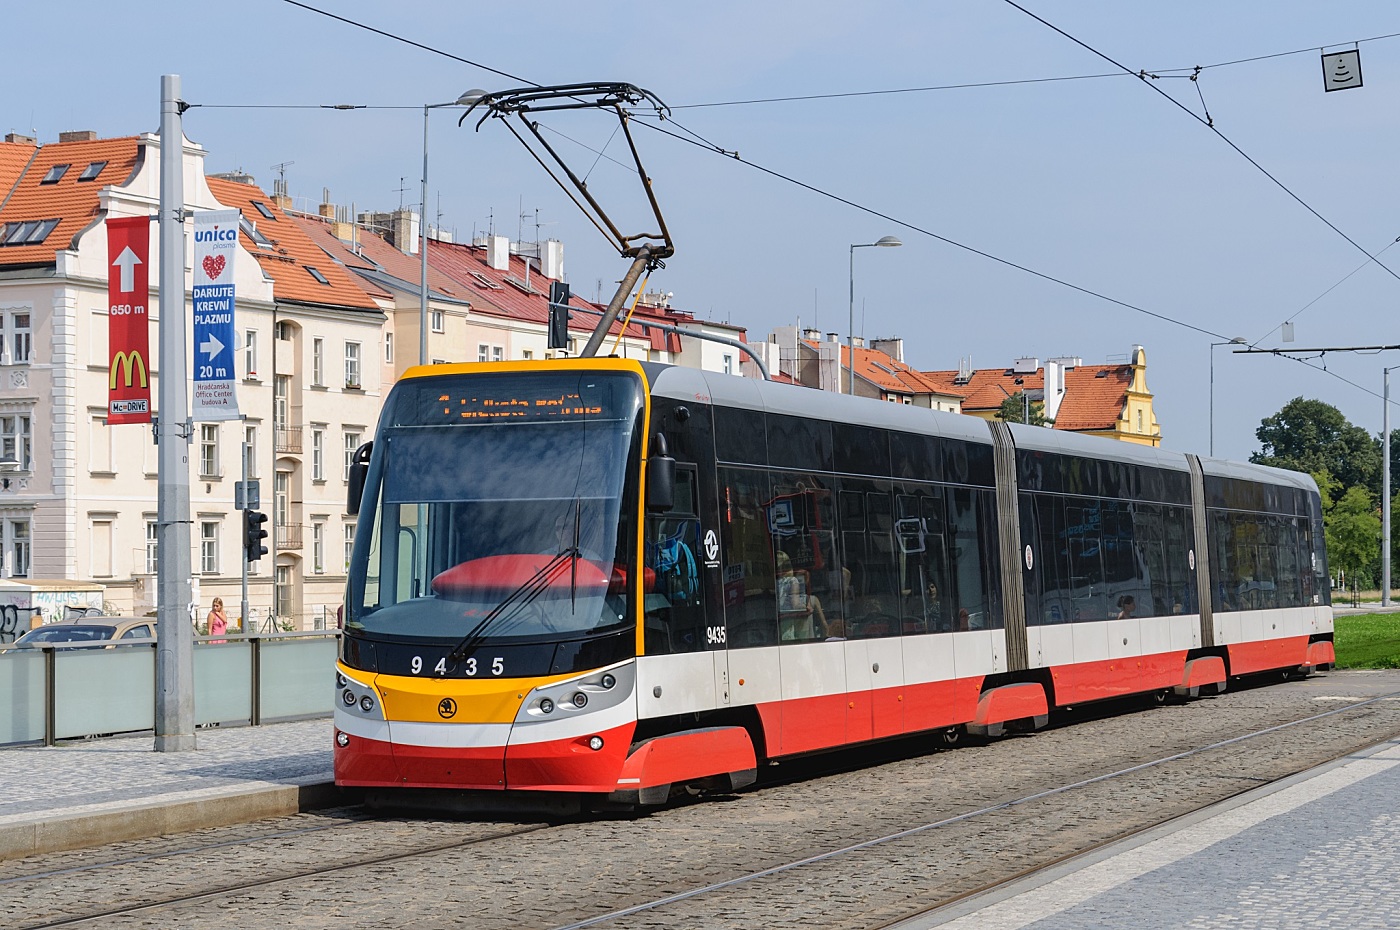 Škoda 15T Praha #9435